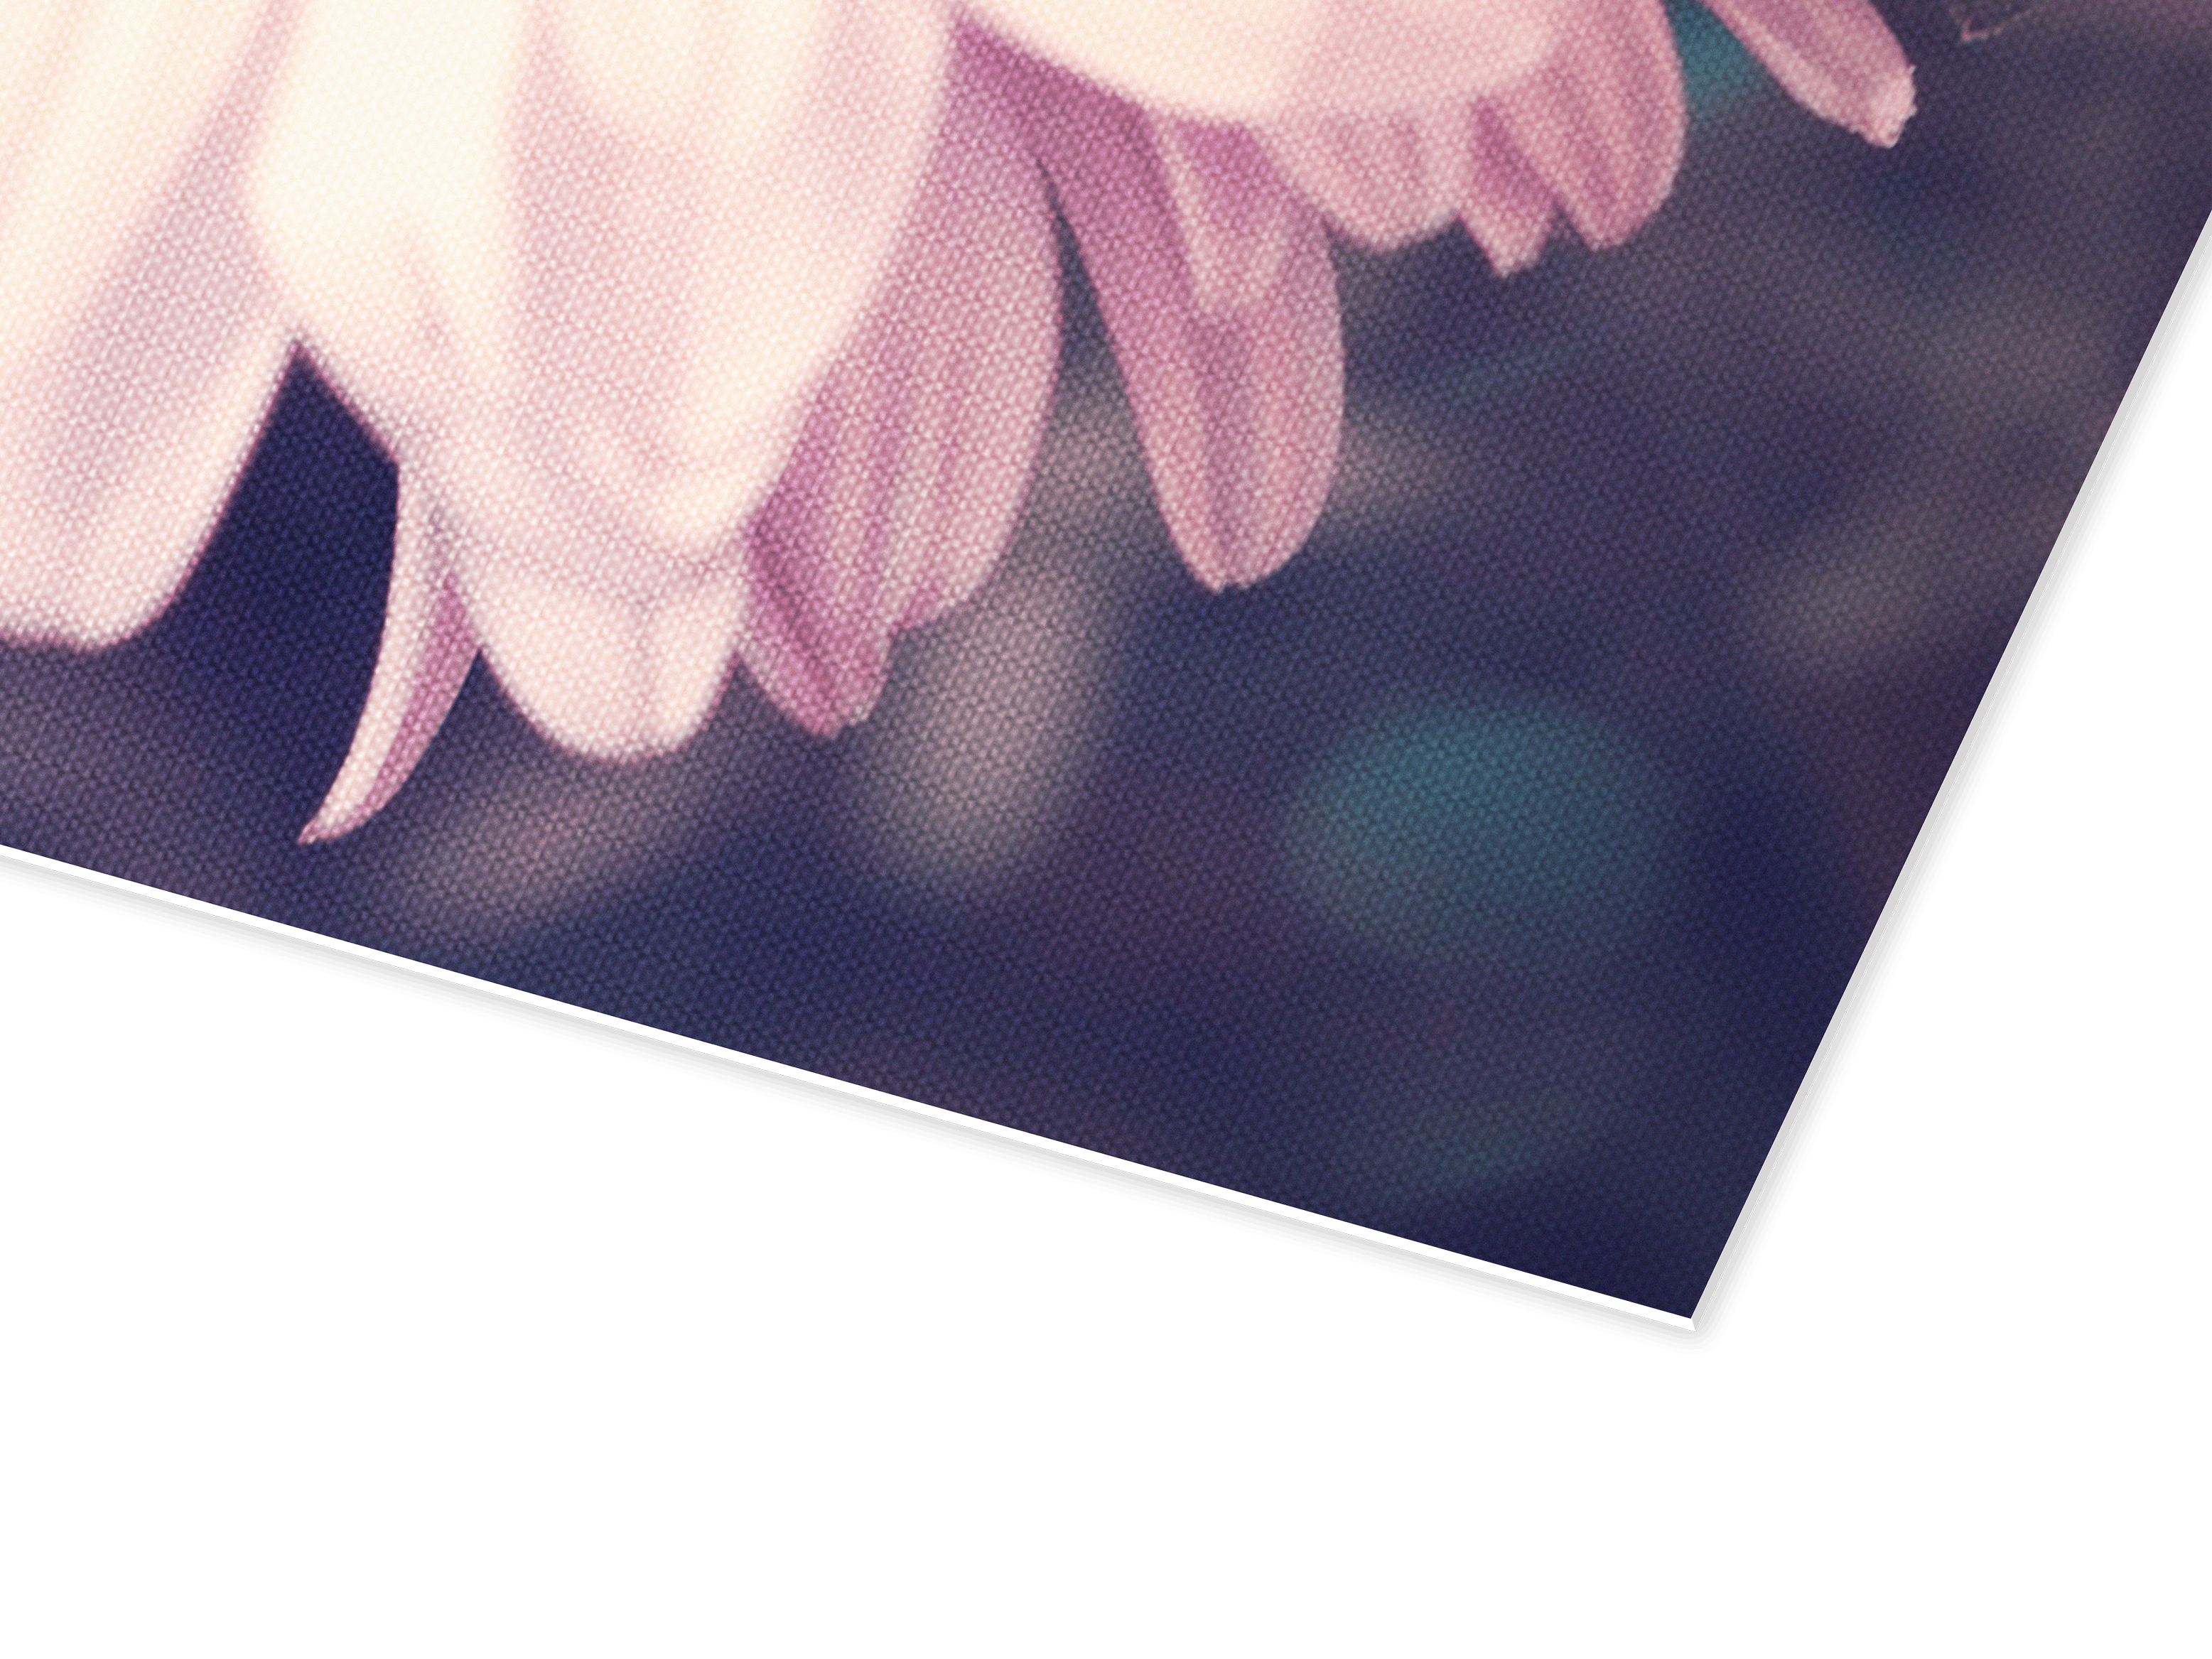 Detaljbild av fotoaffischen med silk screen fotopapper